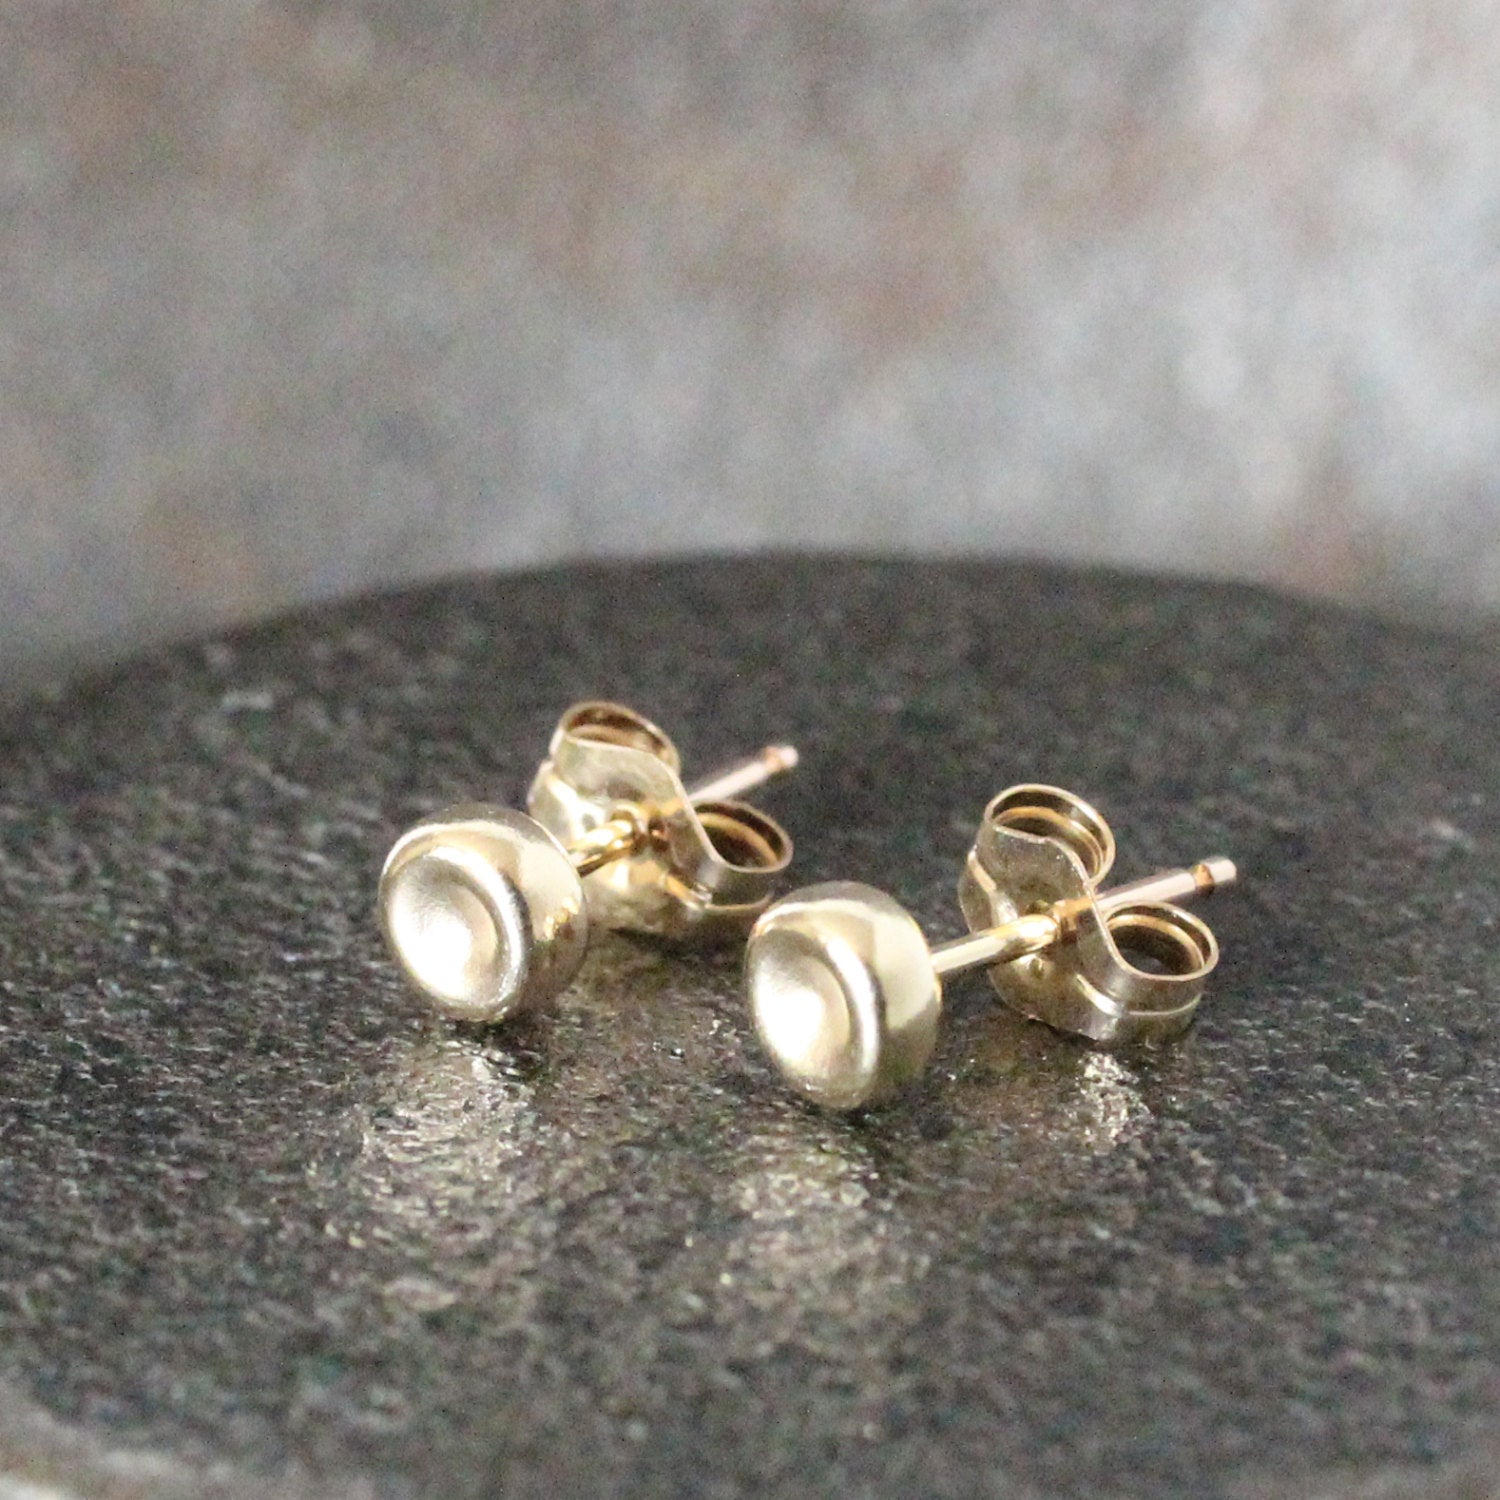 Gold Disc Hammered Earrings, Circle Earrings, Gold Filled Stud Earrings,  Geometric Earrings, Minimalist Everyday Earrings, Disk Round Posts - Etsy |  Stud earrings, Minimalist earrings, Everyday earrings